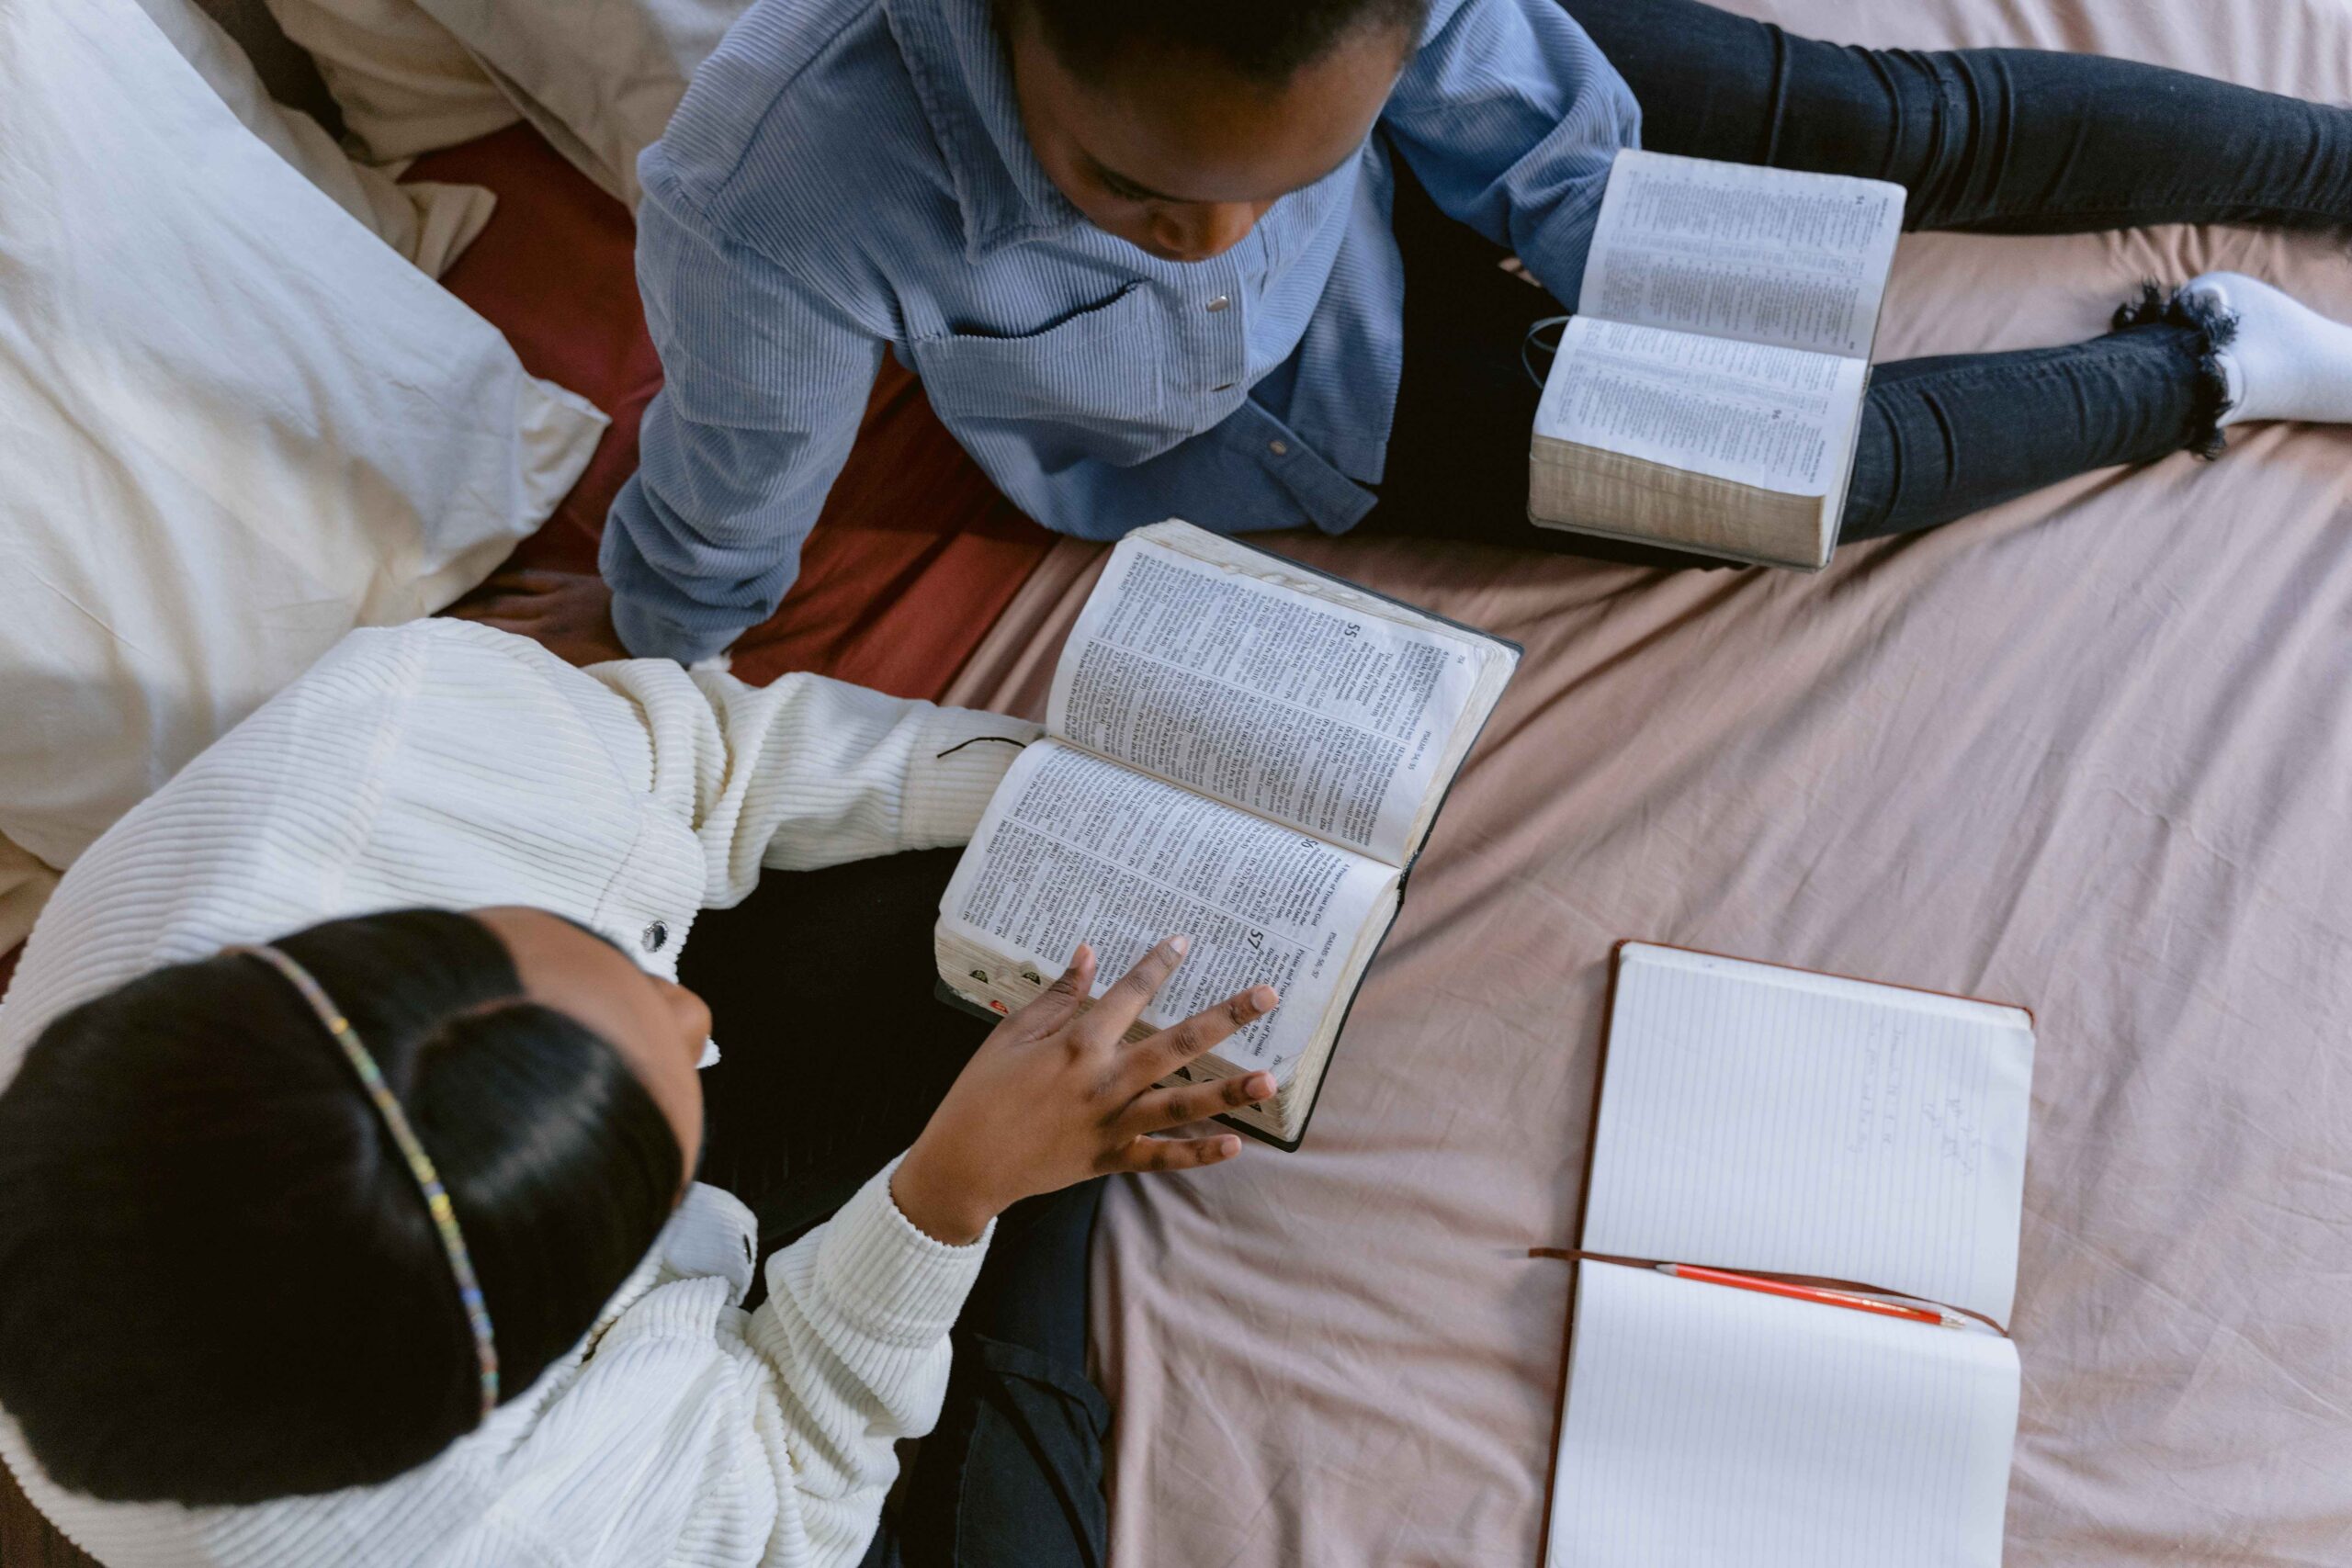 How To Choose A Fun 52 Week Family Bible Reading Plan